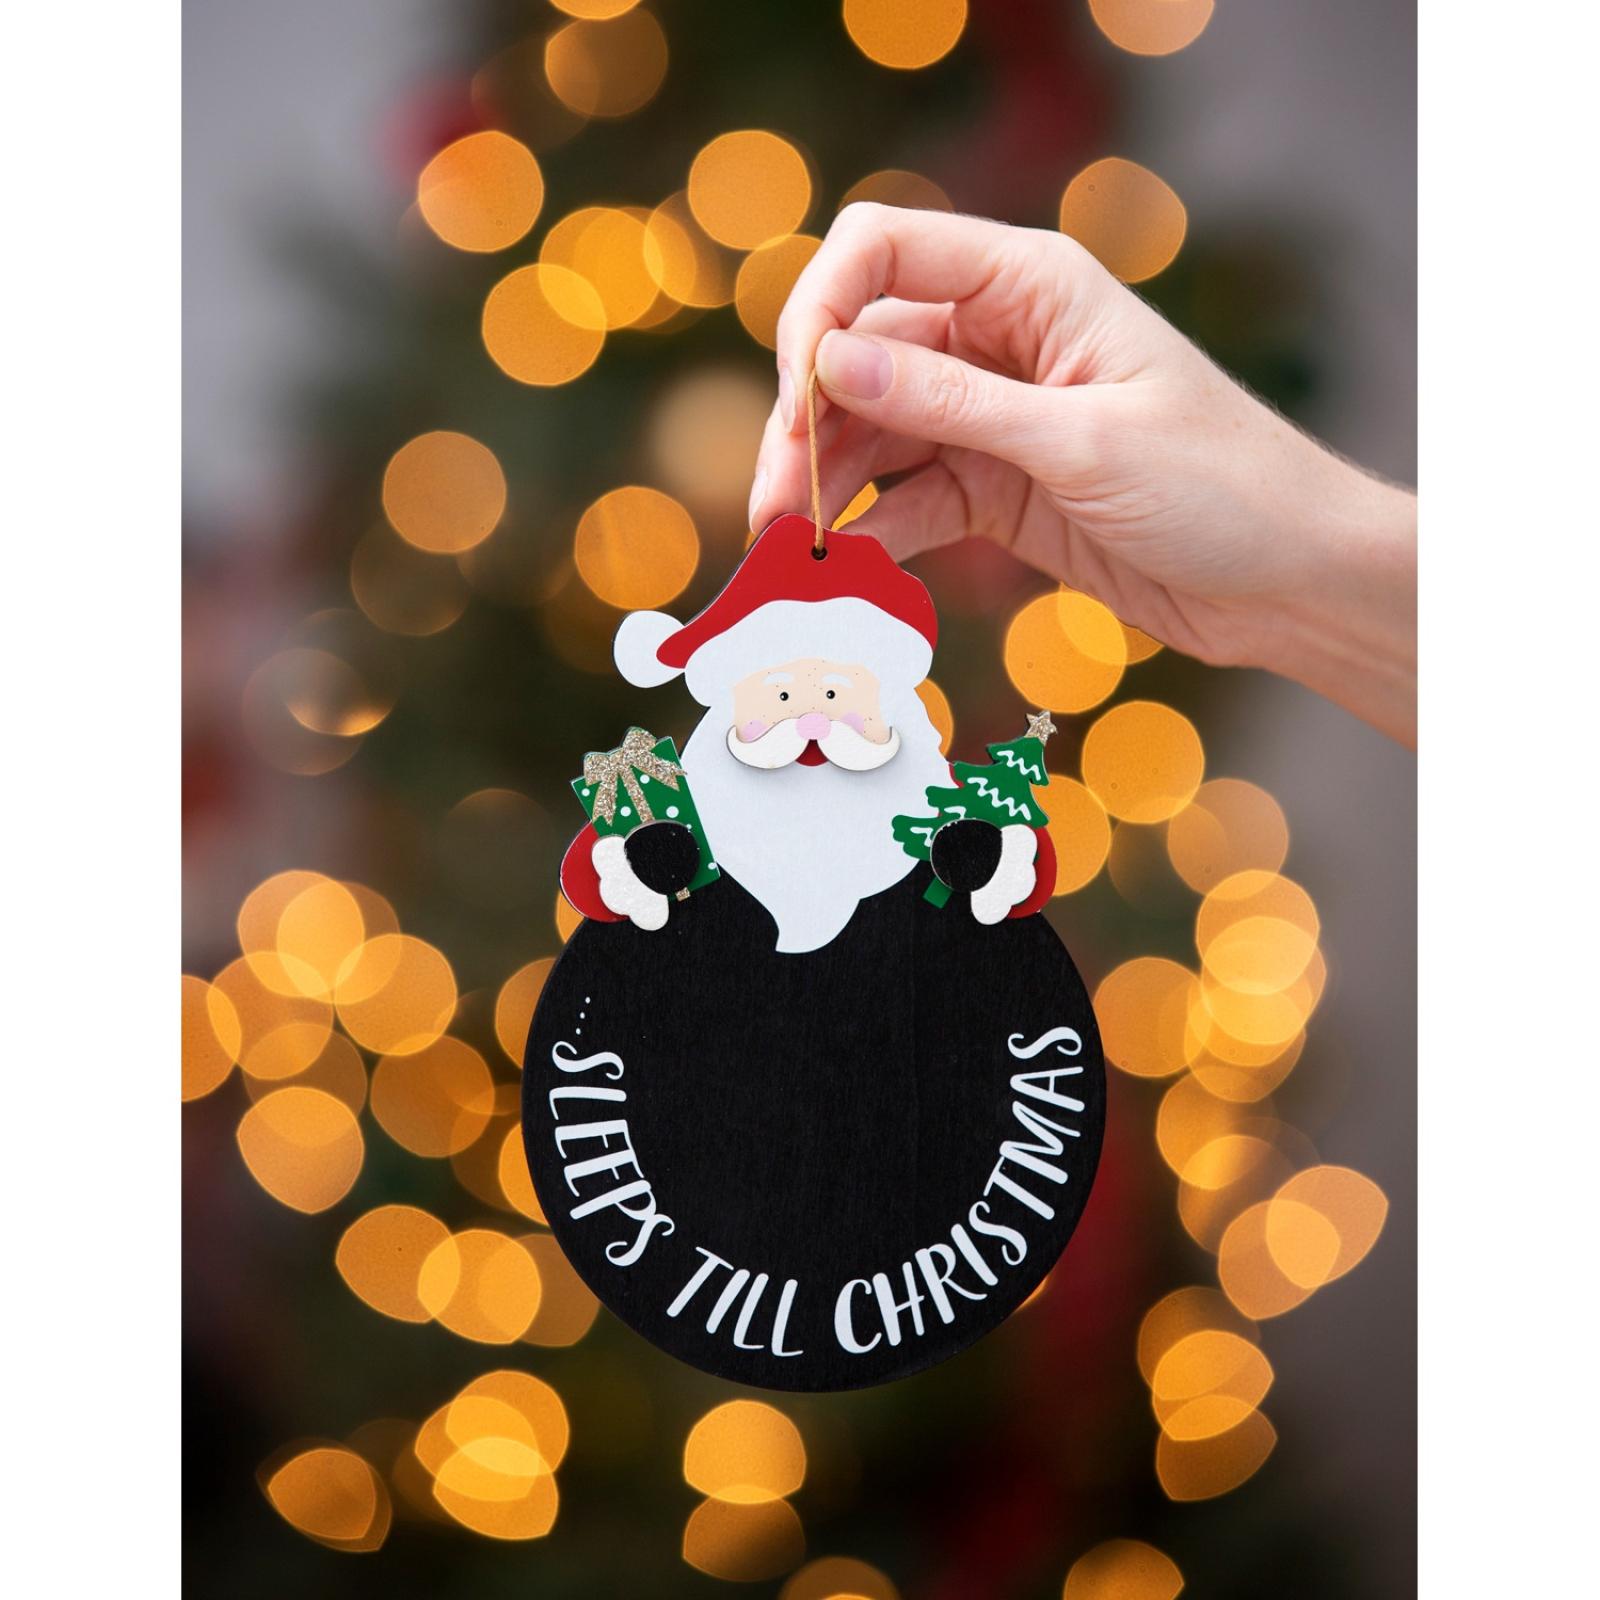 Evergreen Enterprises Assorted Chalkboard "Sleeps Till Christmas" Ornament